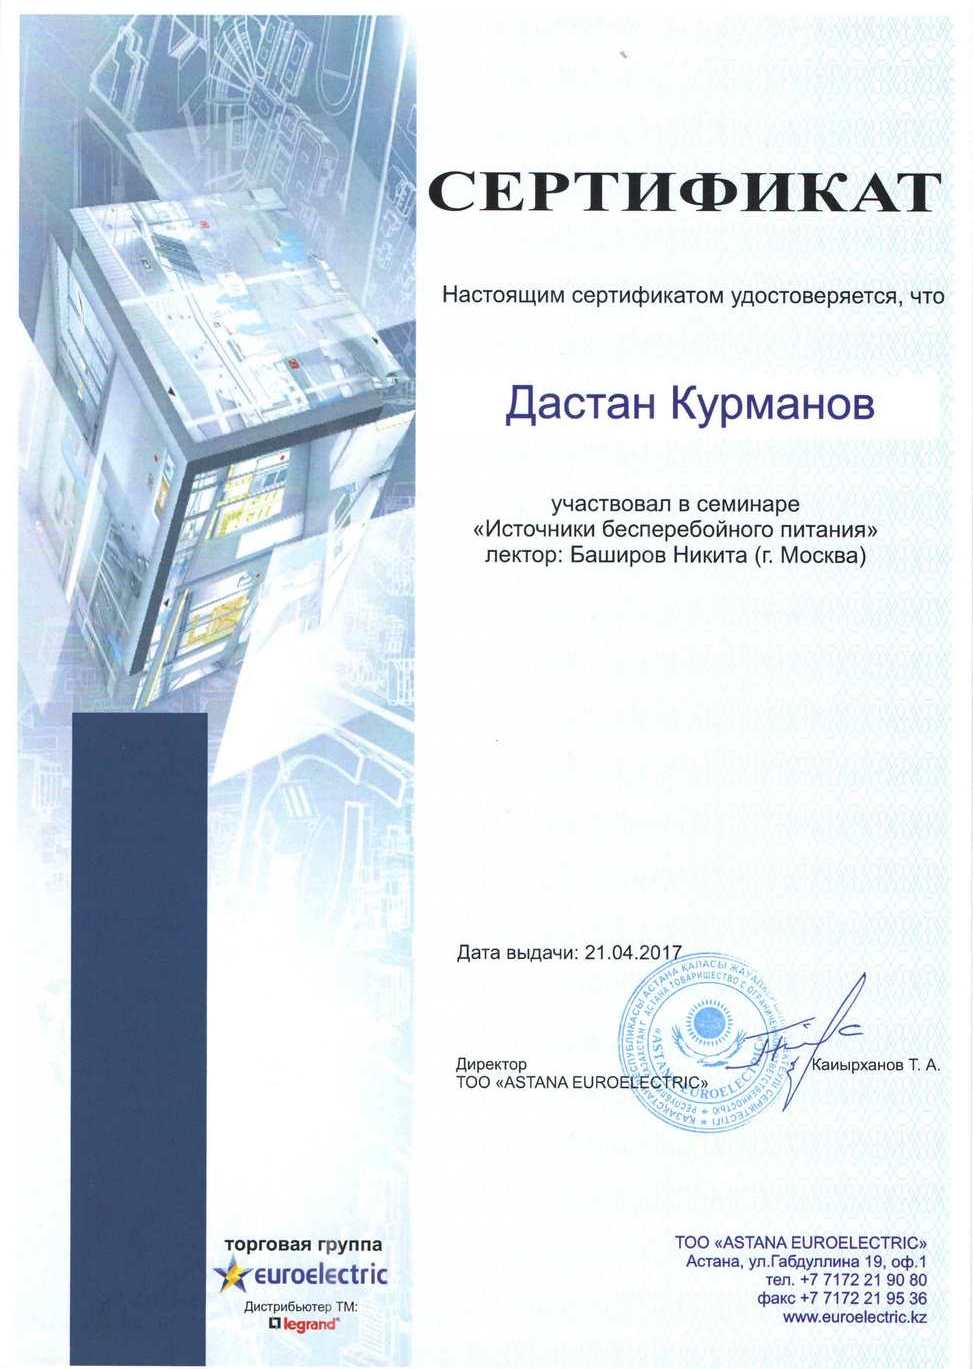 Сертификат компании Euroelectric